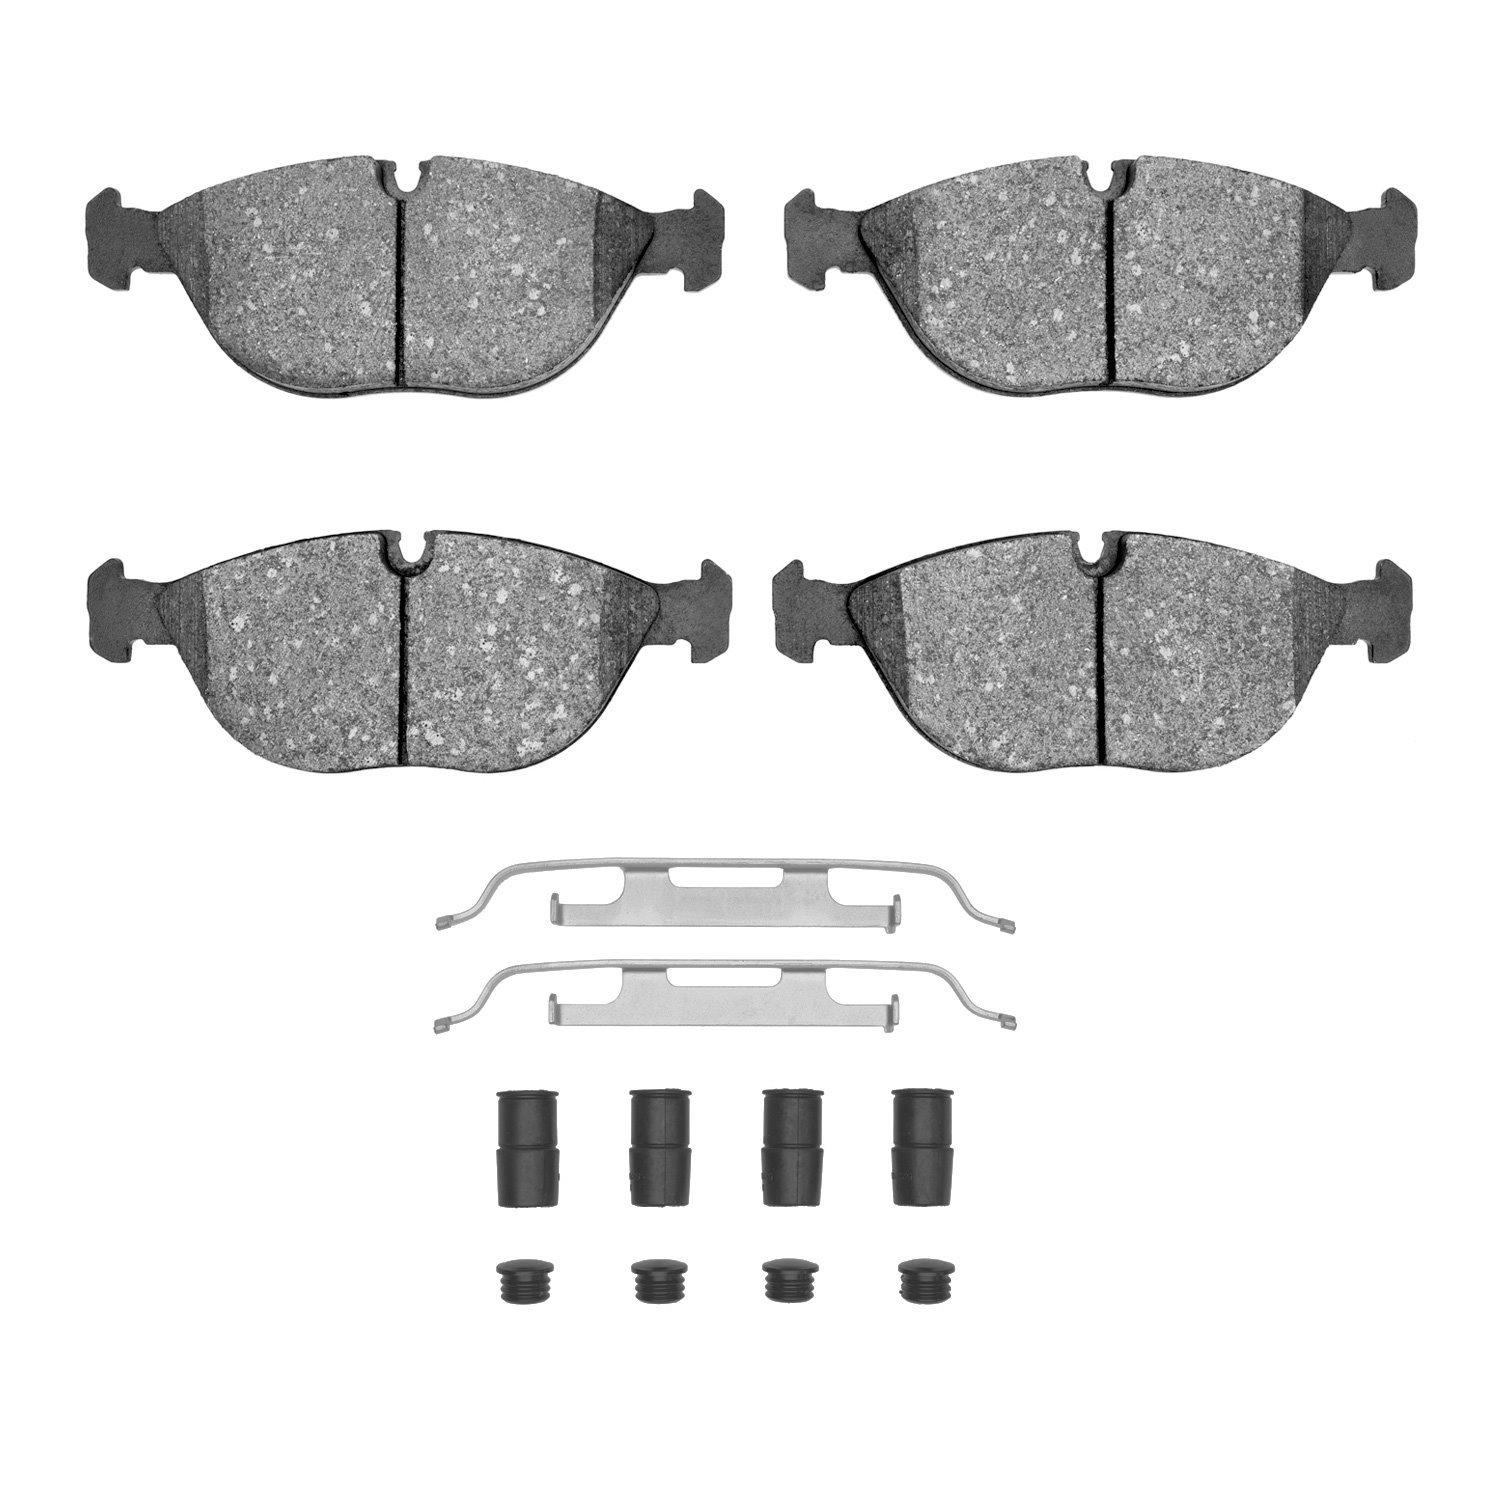 Euro Ceramic Brake Pads & Hardware Kit, 1995-2006 Fits Multiple Makes/Models, Position: Front